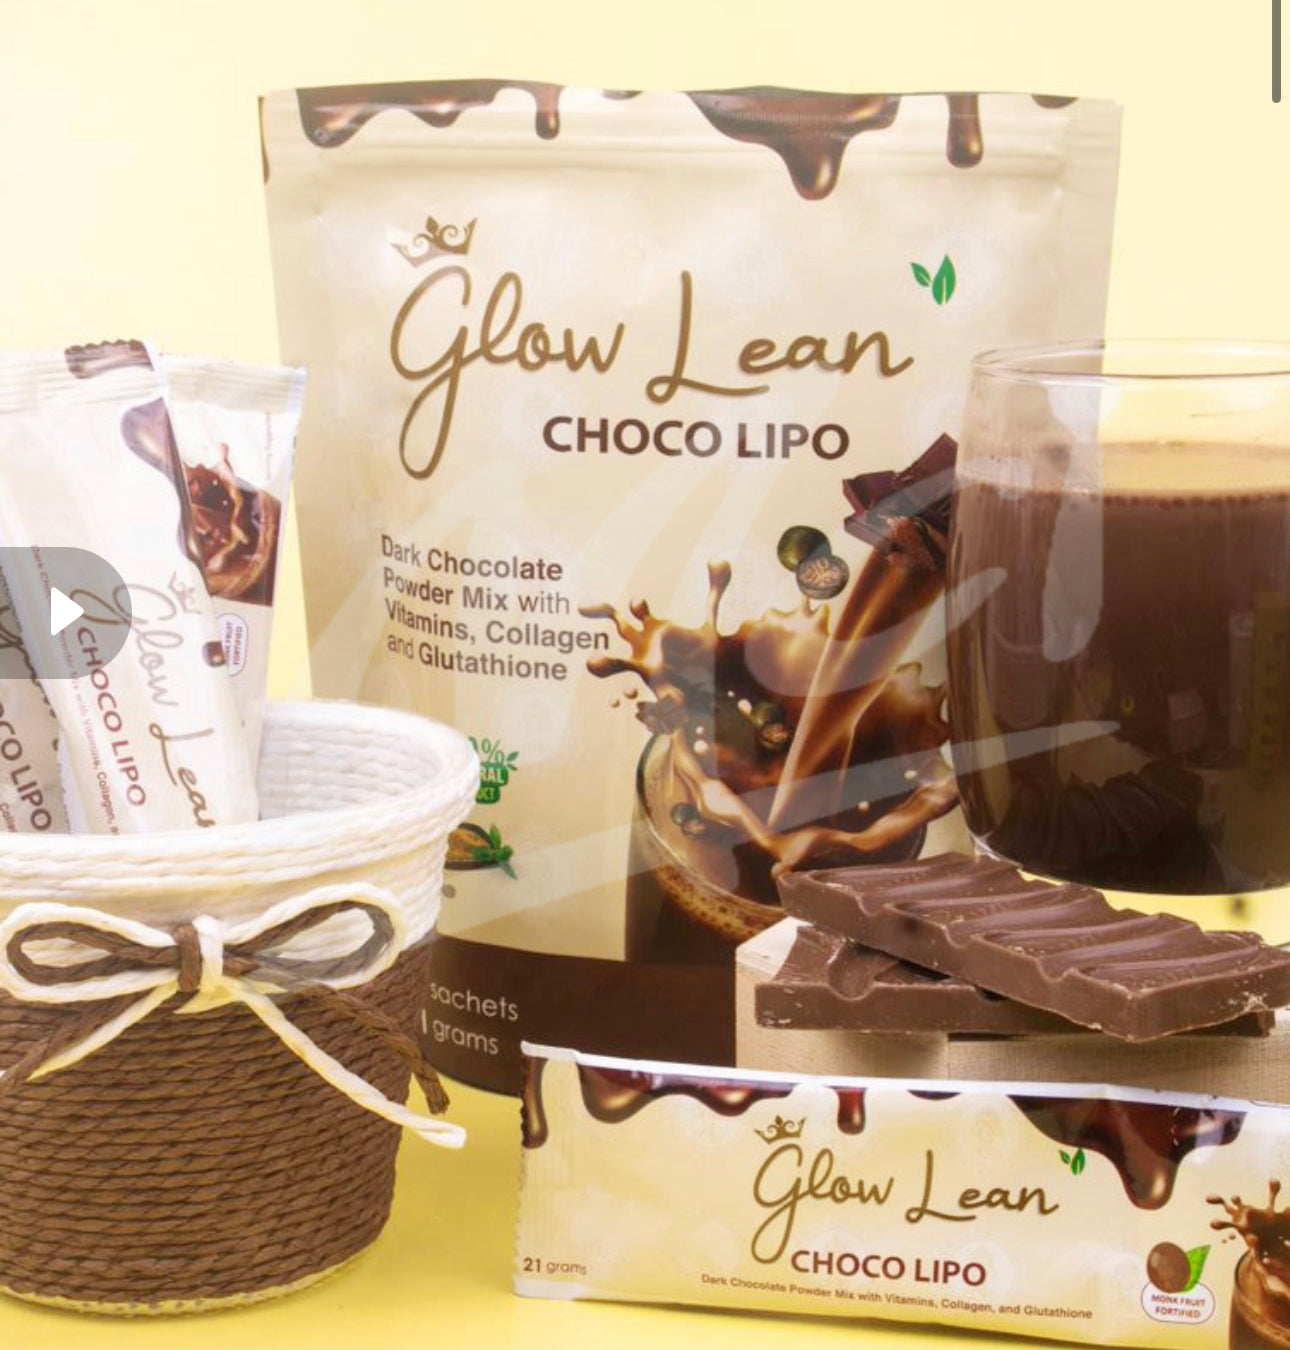 Glow lean choco Lipo and Glow lean coffee by gorgeous glow